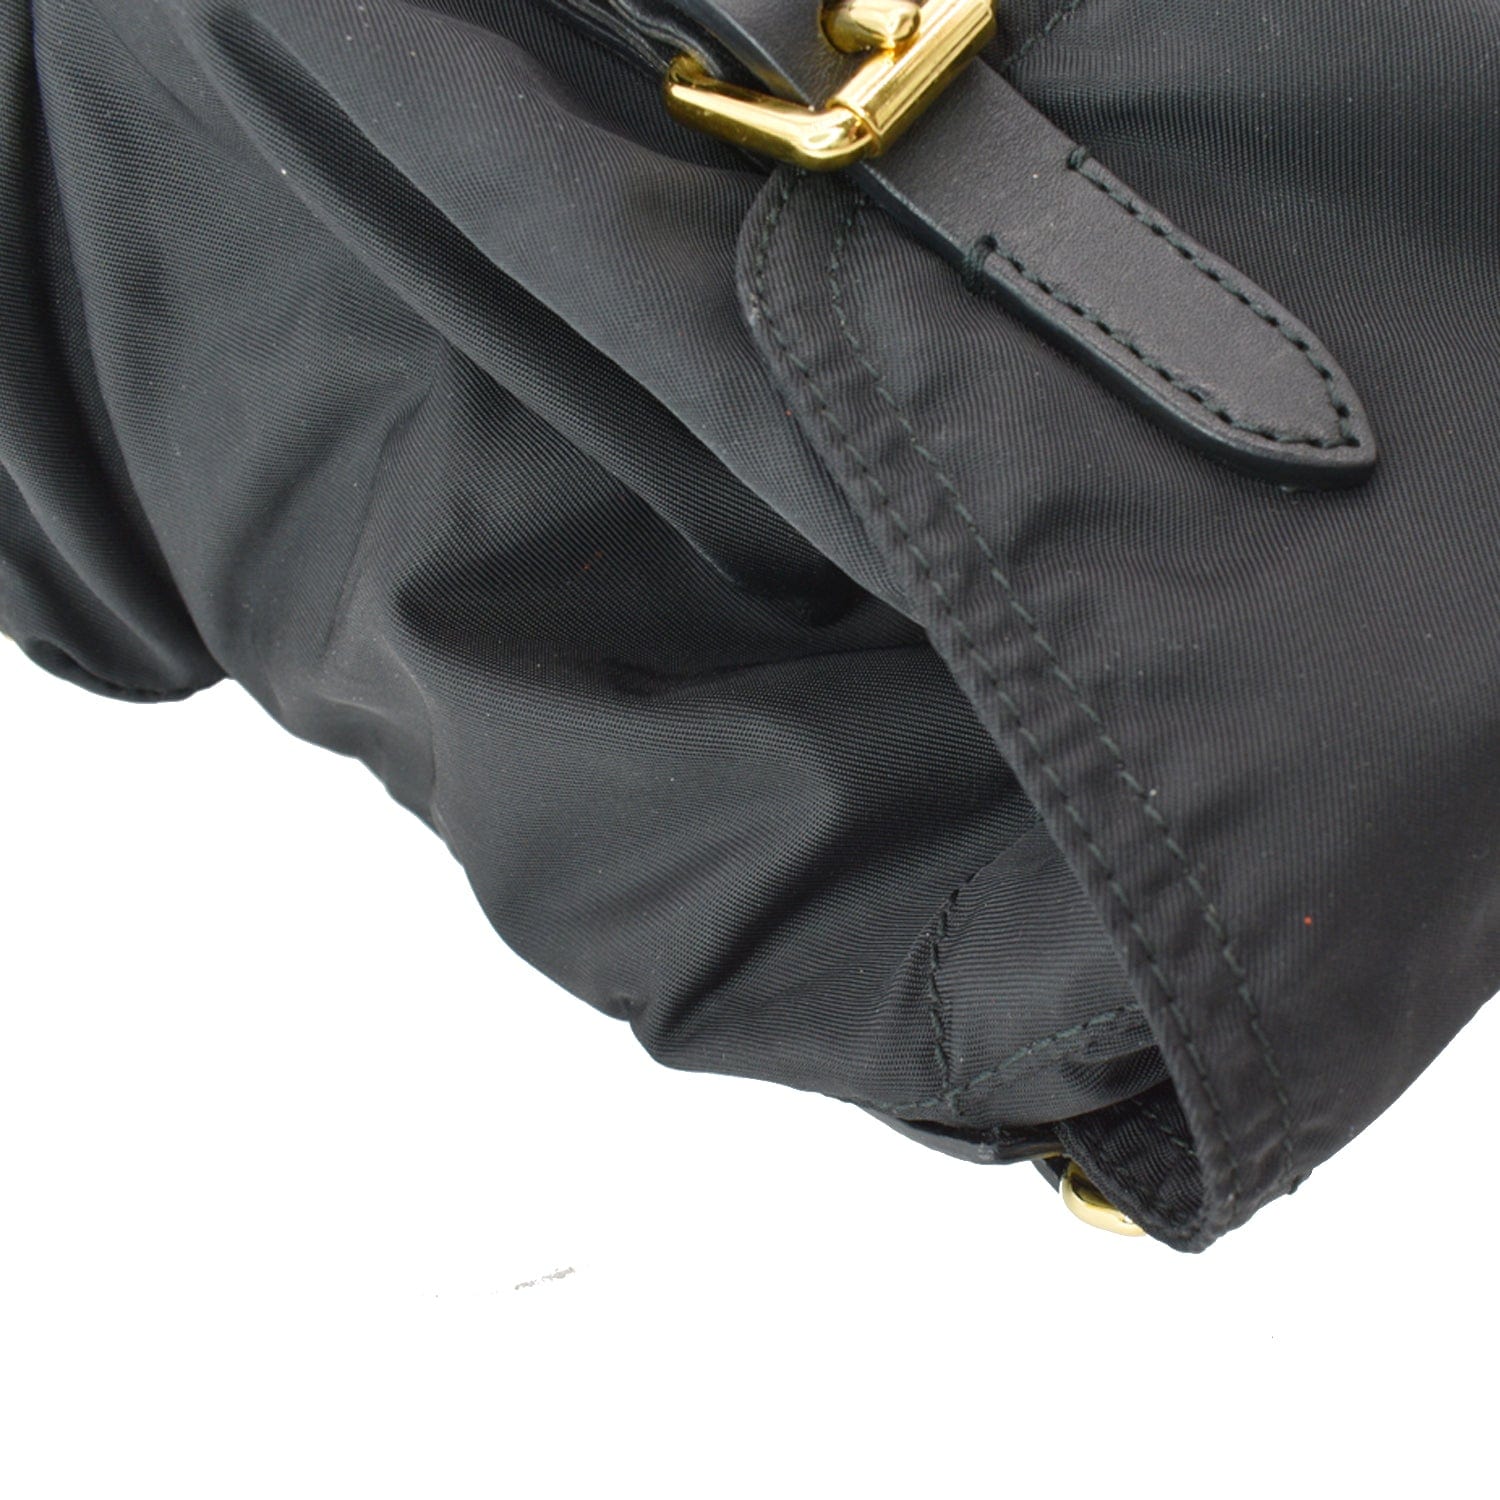 Backpack Rucksack (Black)